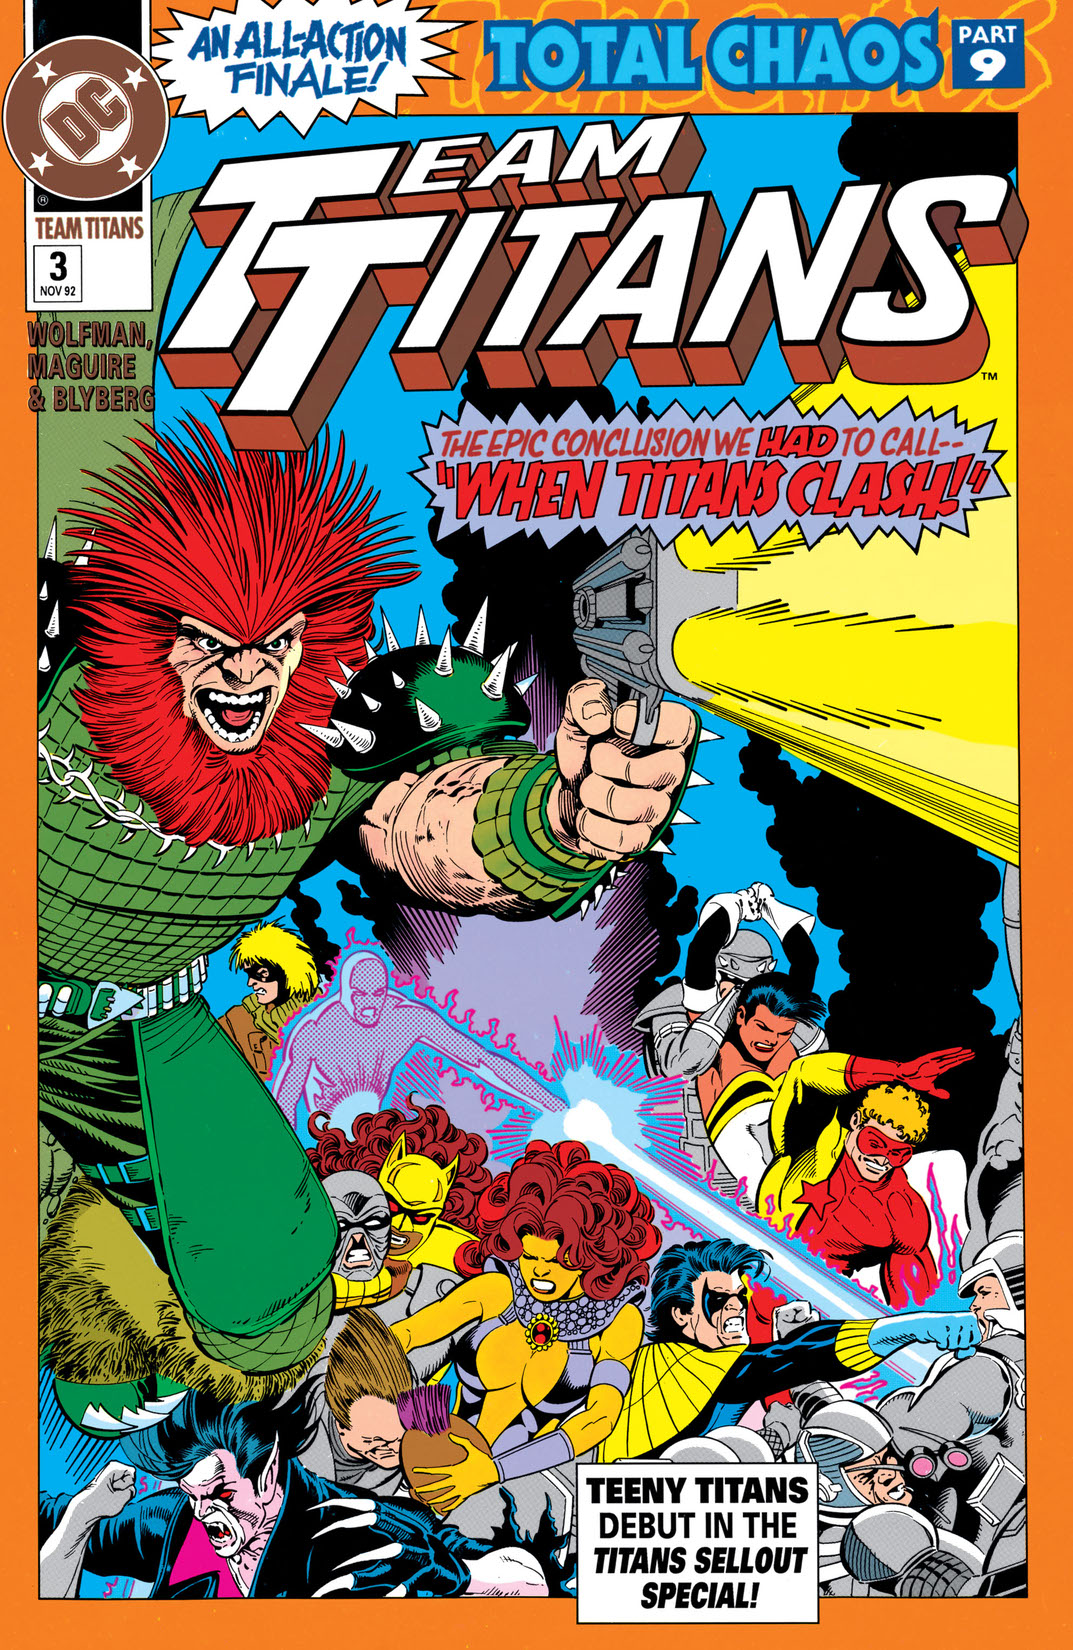 Team Titans #3 preview images